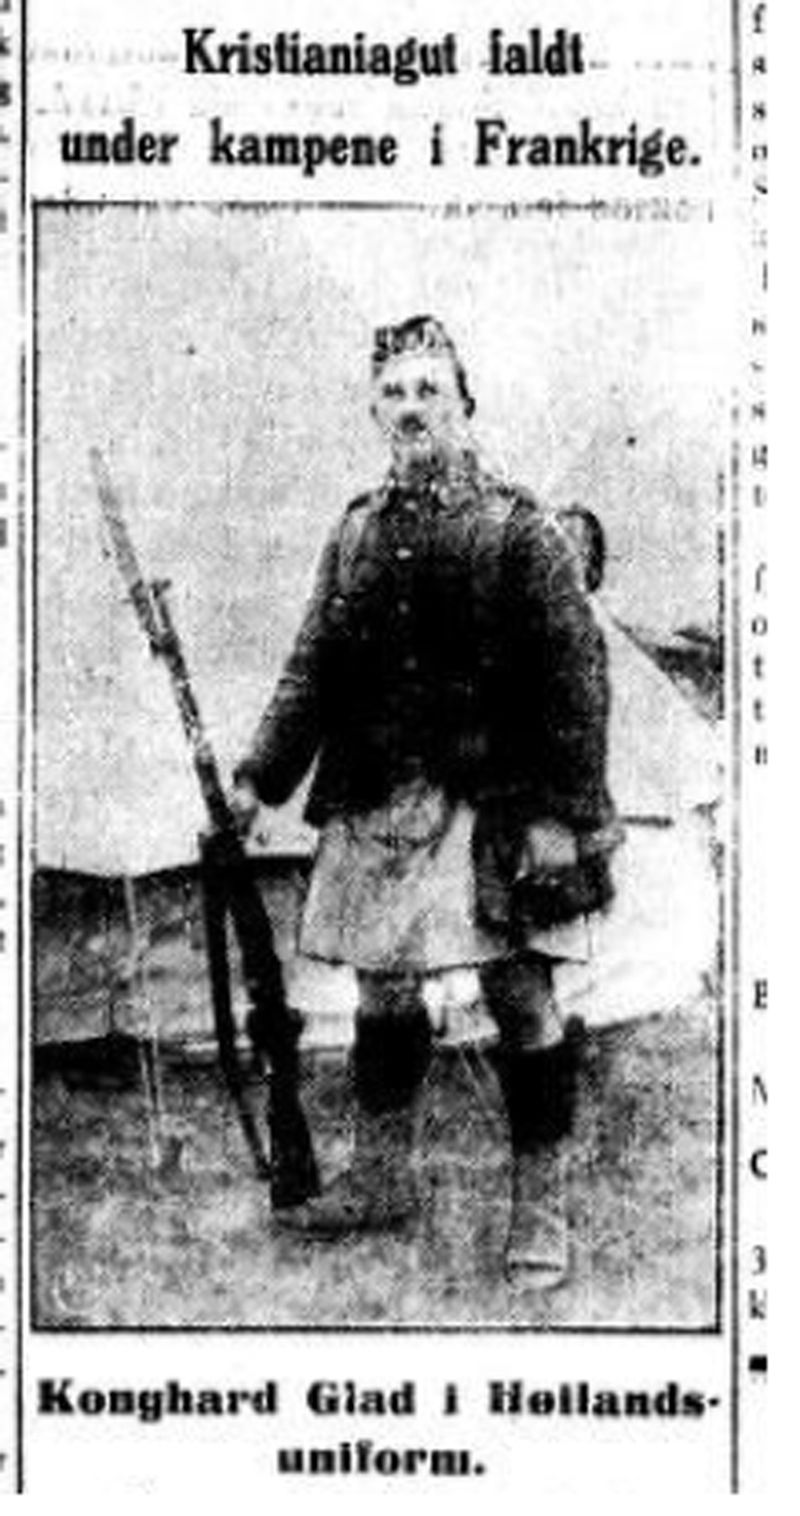 Avisnotis med bilde av en soldat i uniform. Tekst: "Kristianiagut faldt under kampene i Frankrige. Konghard Glad i Høilandsuniform."